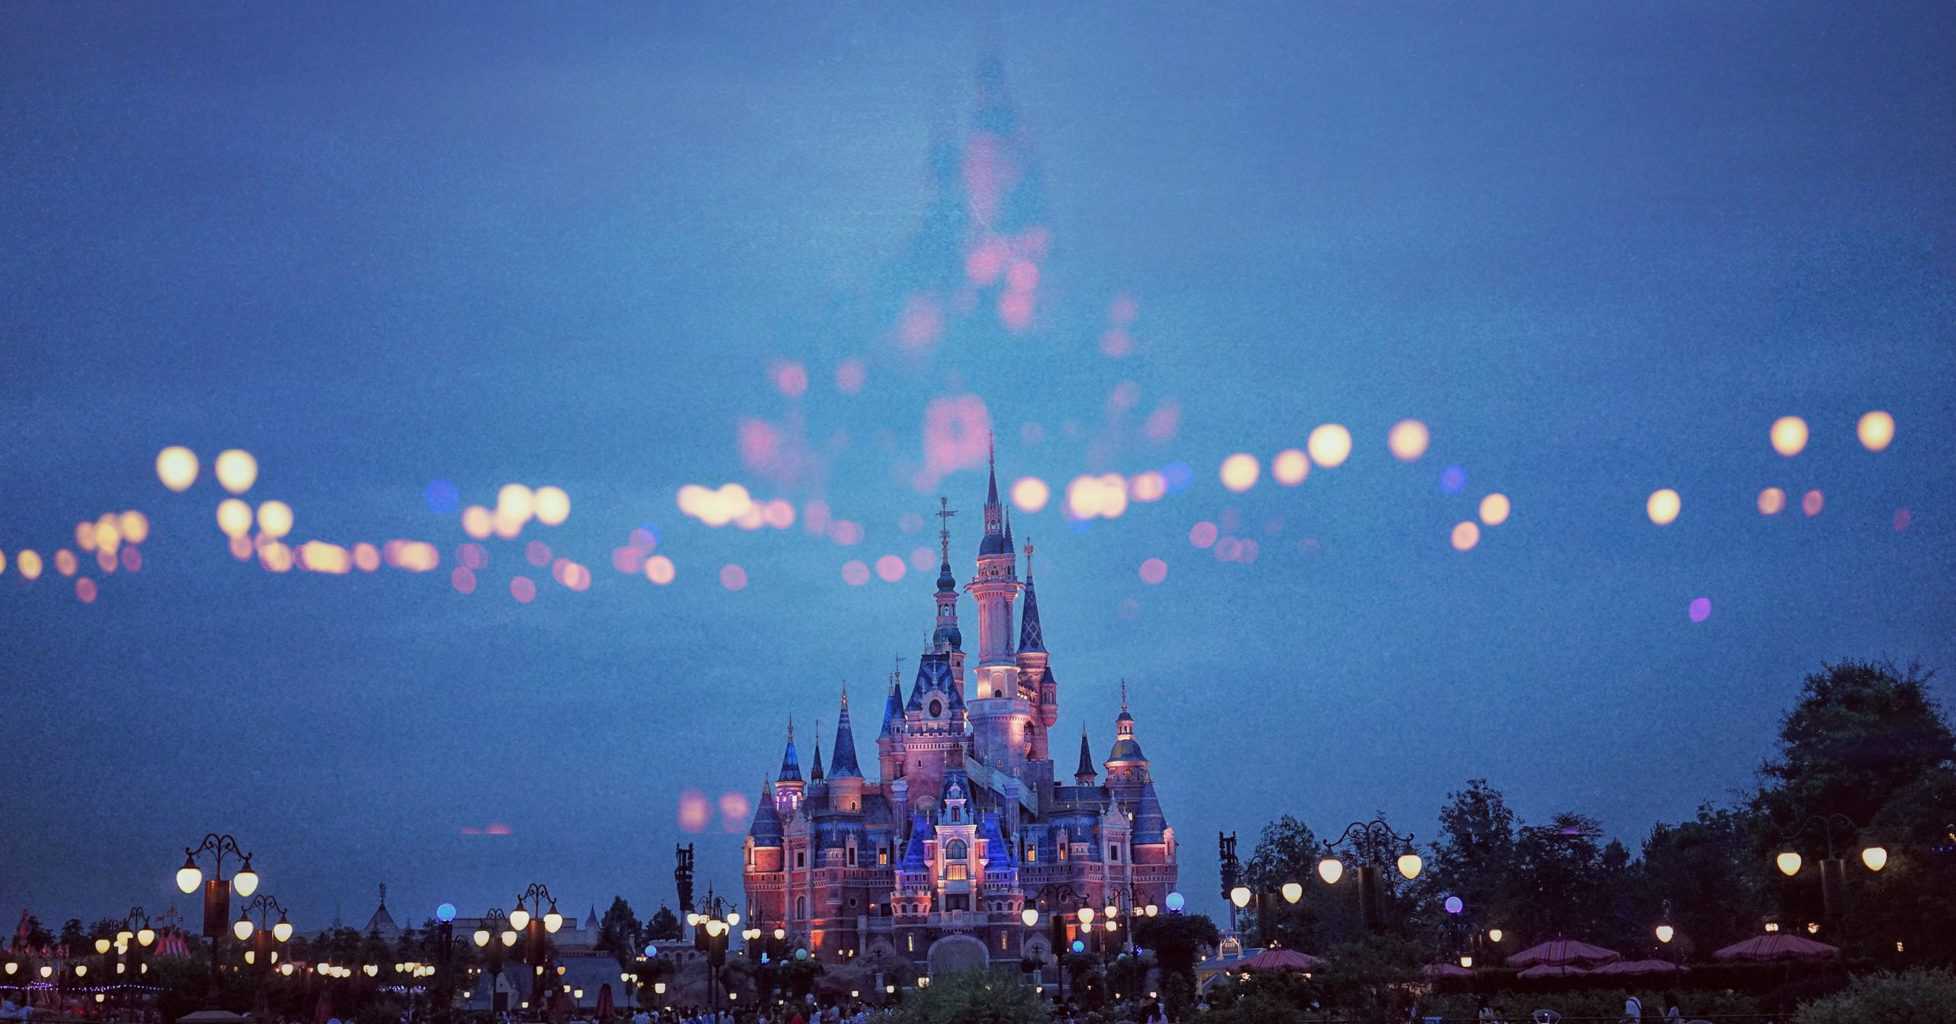 Disney castle at night